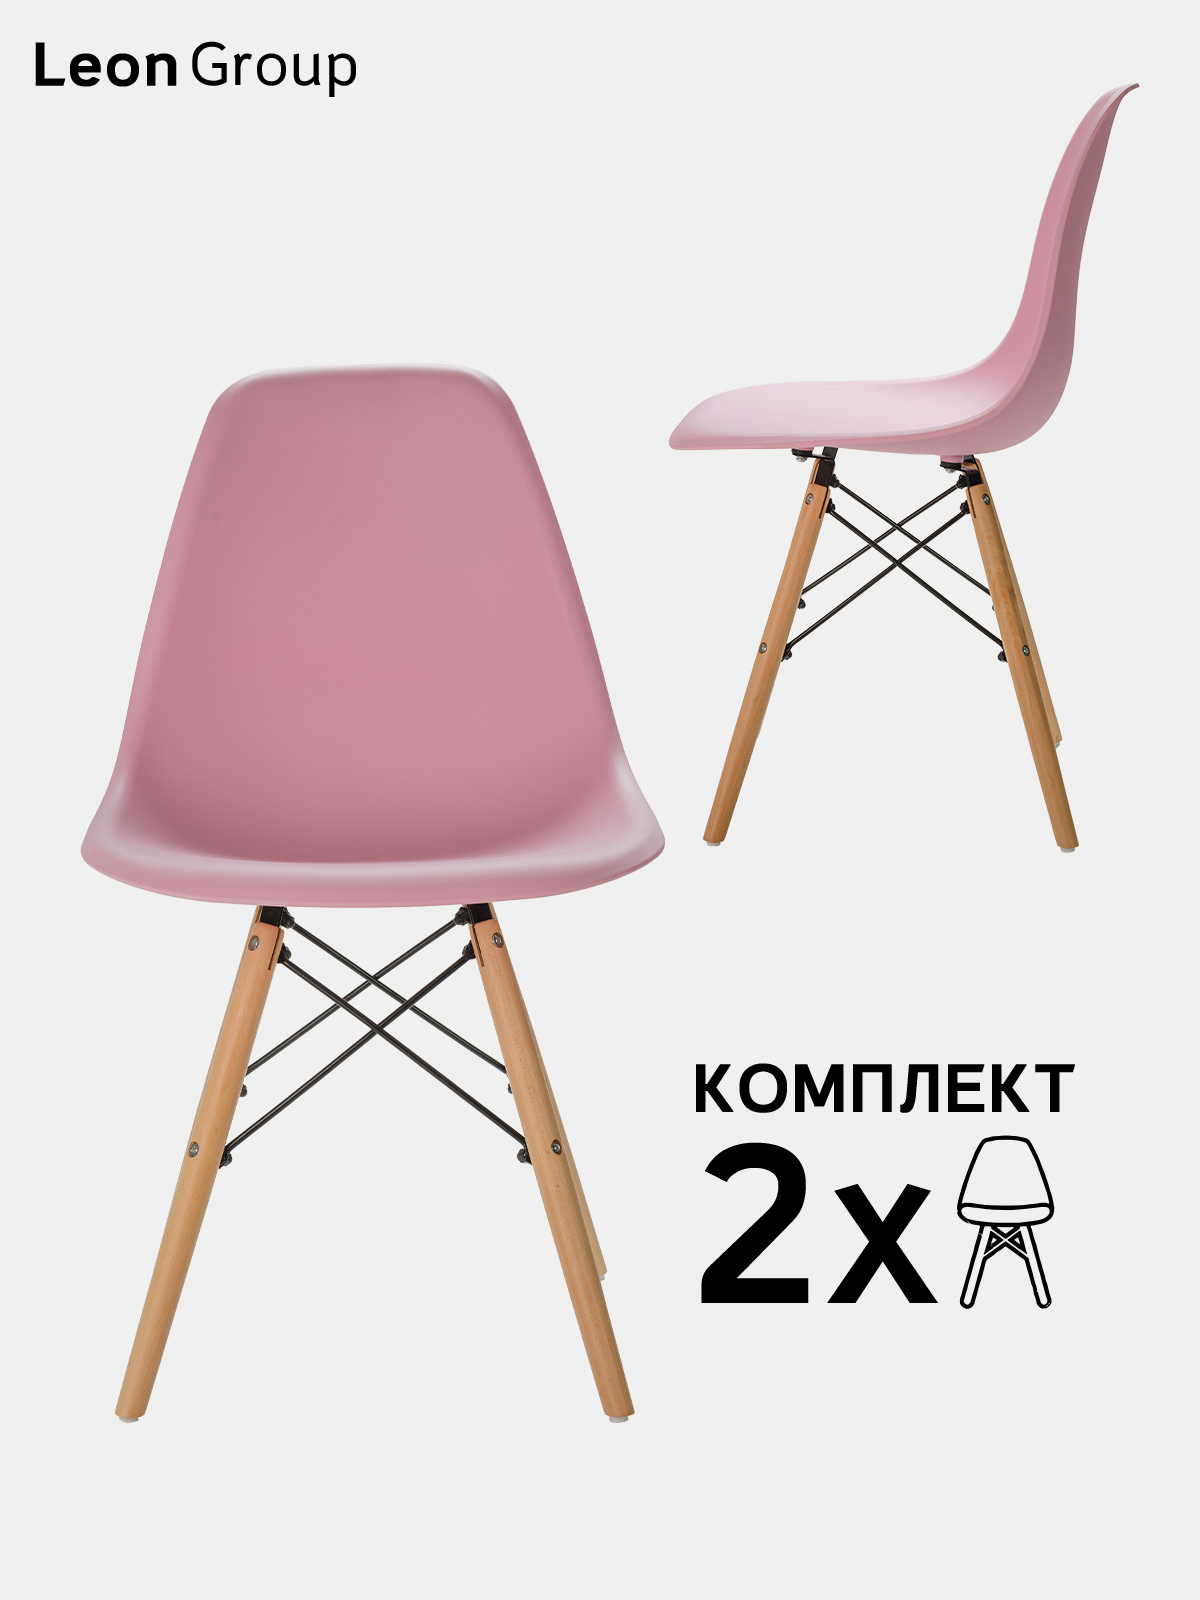 91056898 Комплект стульев 2 шт Eames DSW 83х41х46 см полипропилен цвет розовый LEON EAMES DSW STLM-0461057 LEON GROUP